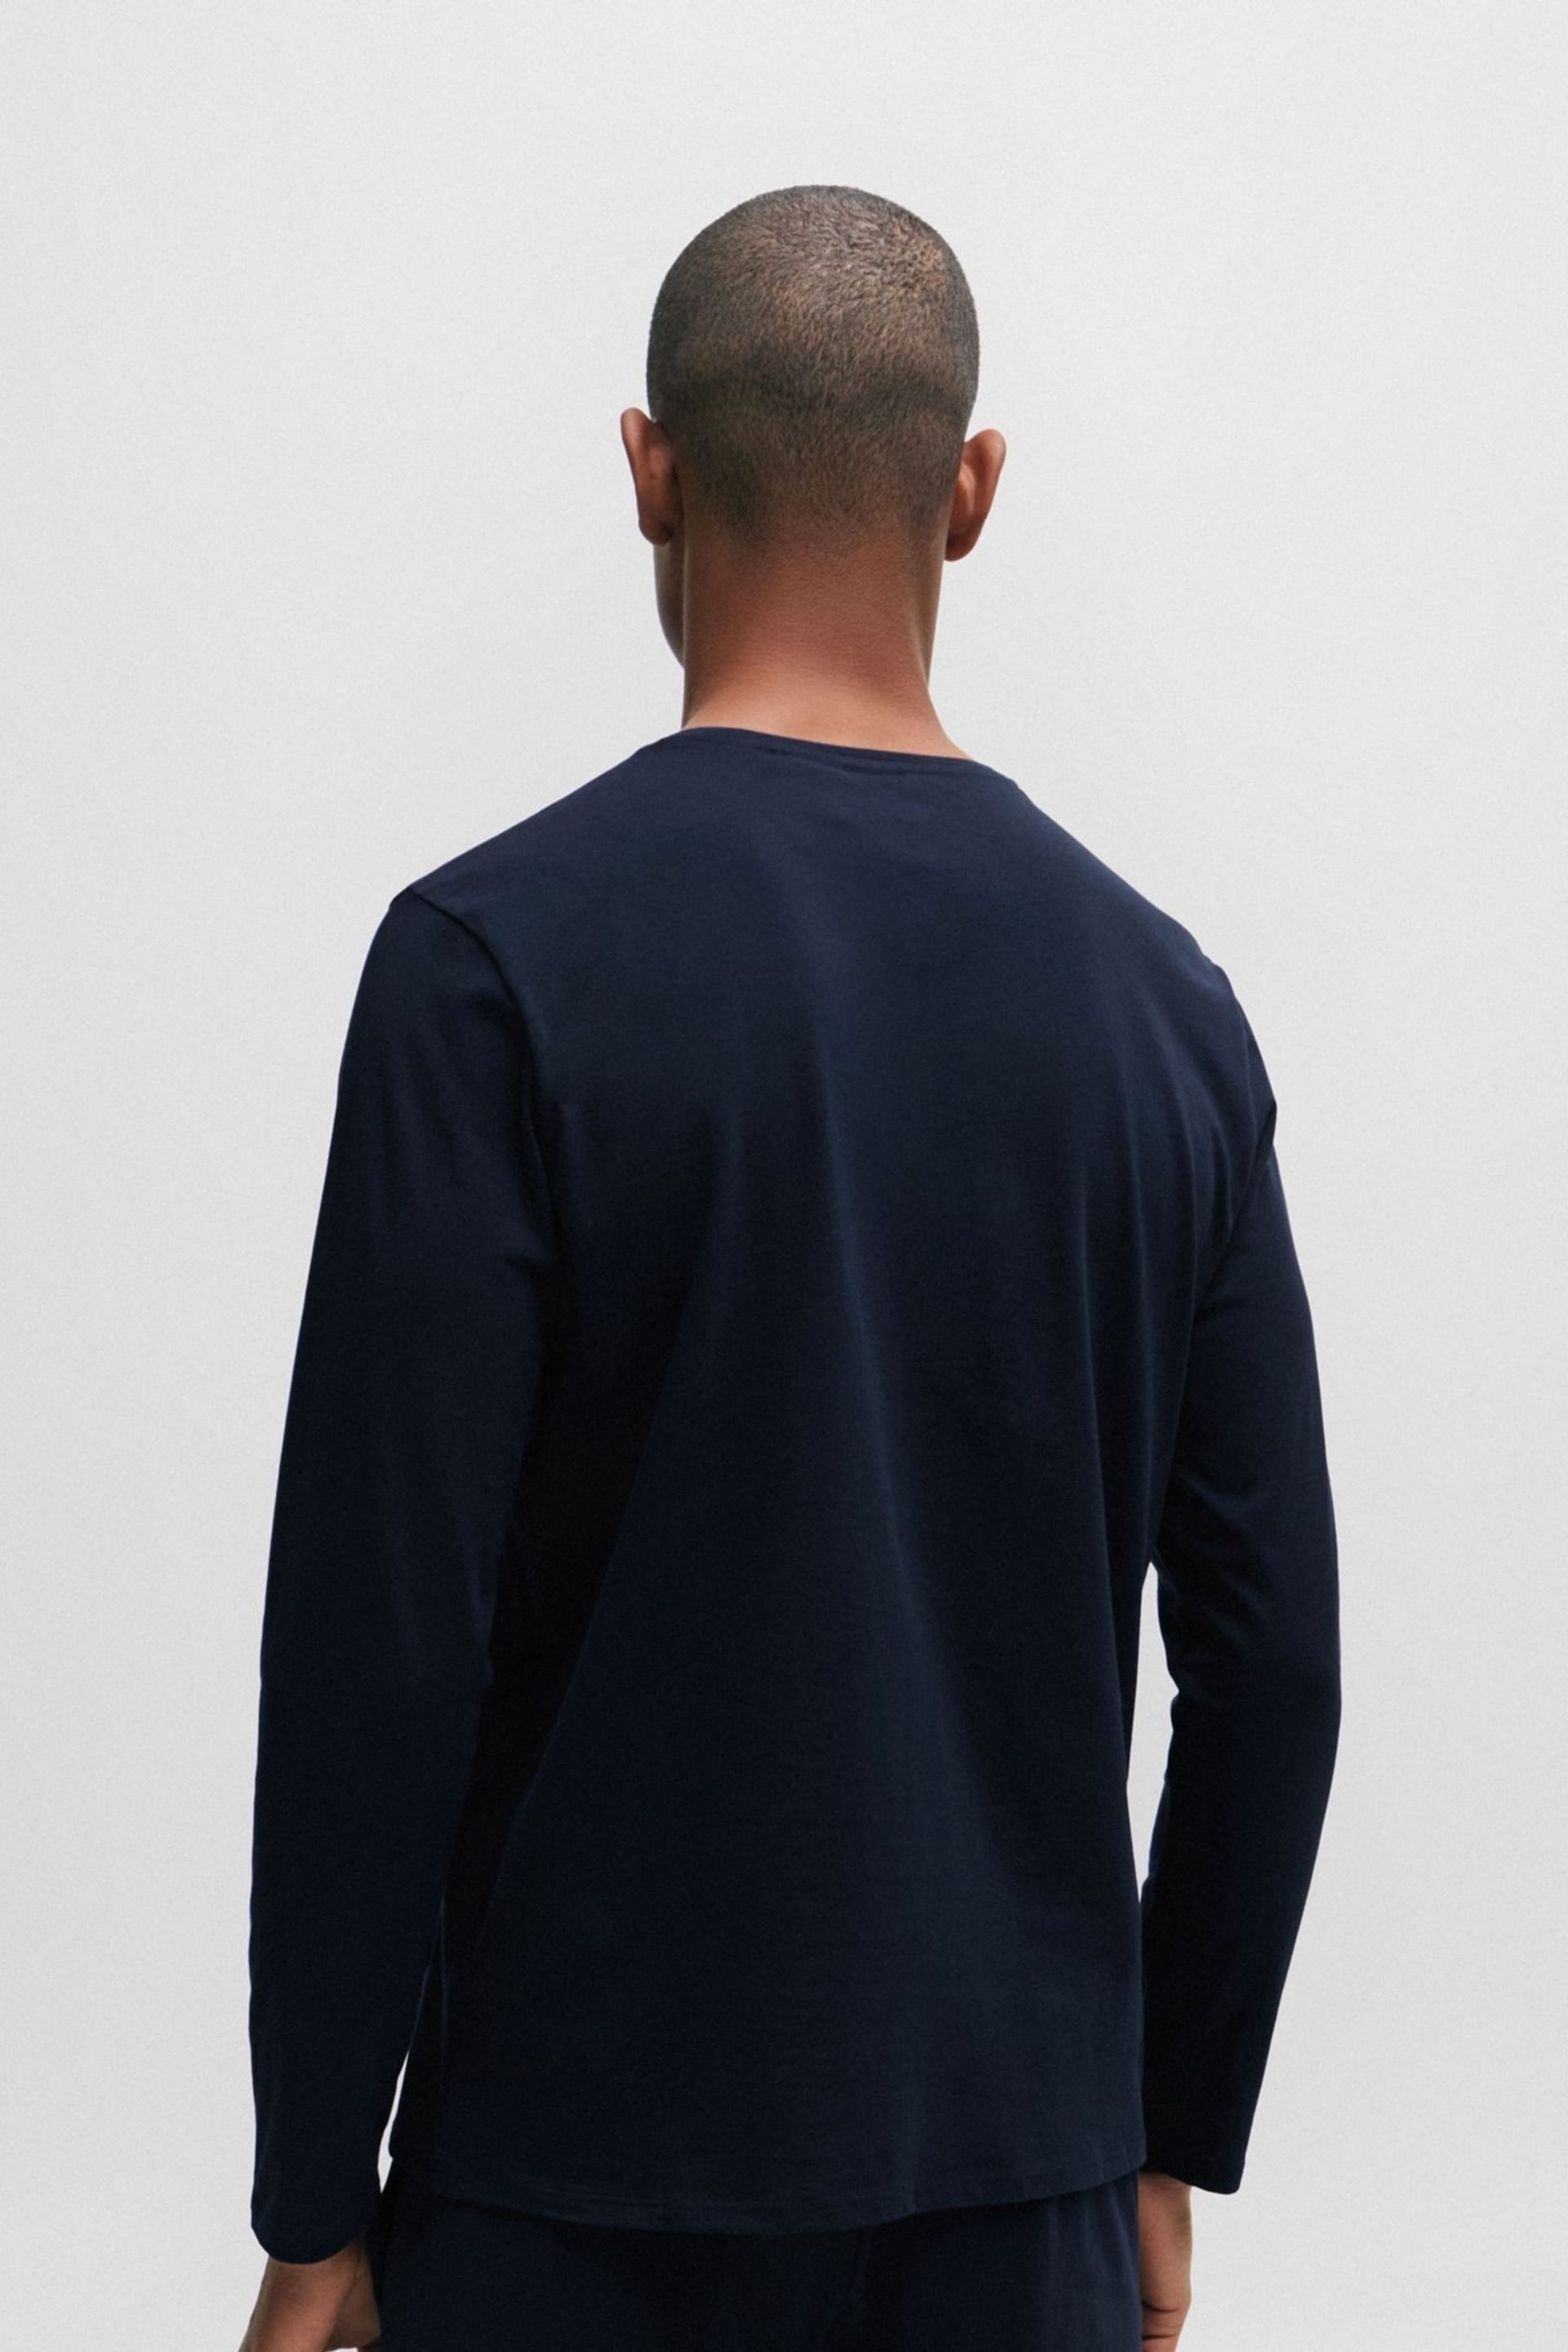 BOSS Blue Stretch Cotton Lounge Long Sleeve T-Shirt - Image 2 of 5